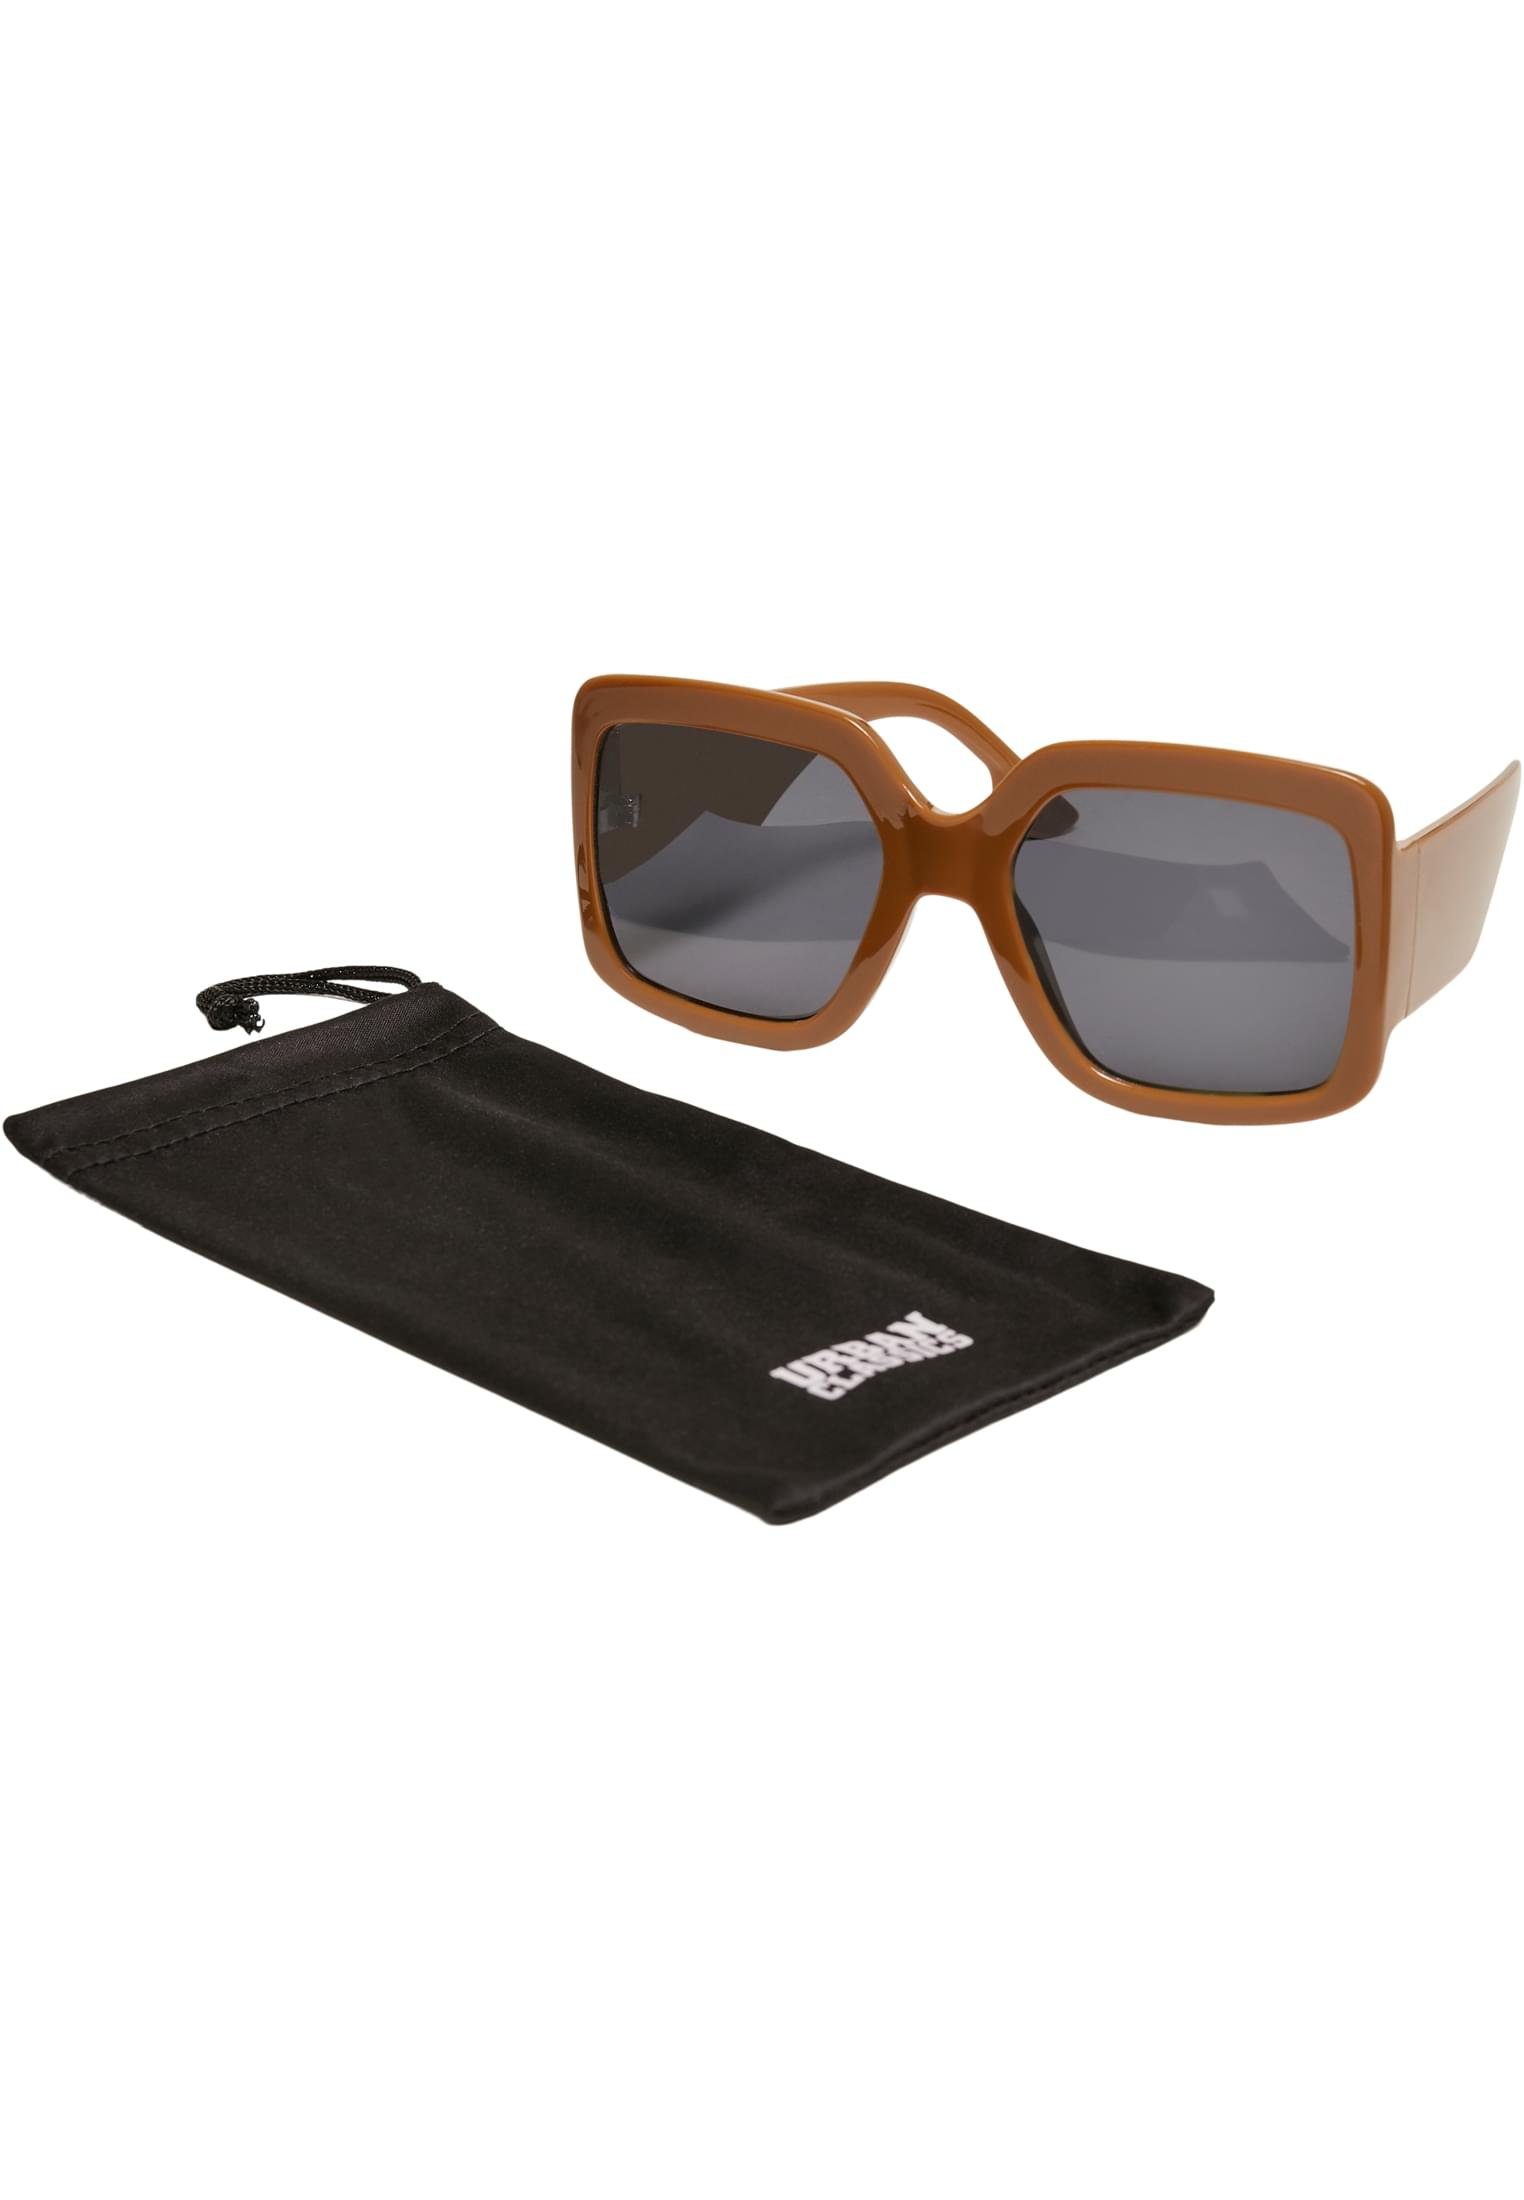 Ideal Sunglasses Sport Monaco, Sonnenbrille Accessoires auch für im URBAN Freien geeignet CLASSICS